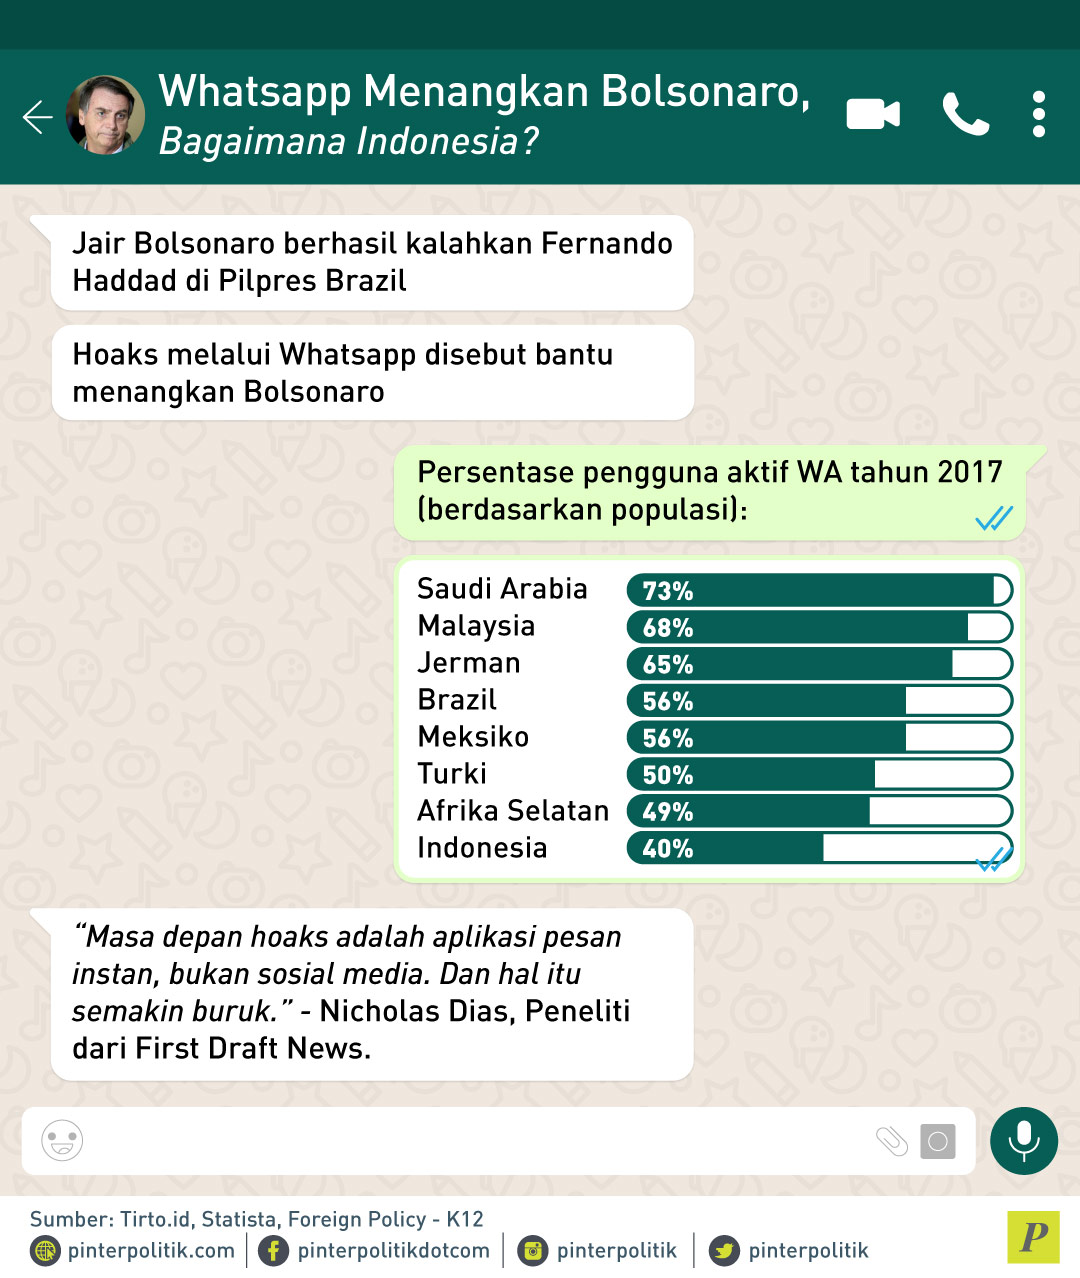 Whatsapp Menangkan Bolsonaro Bagaimana Indonesia